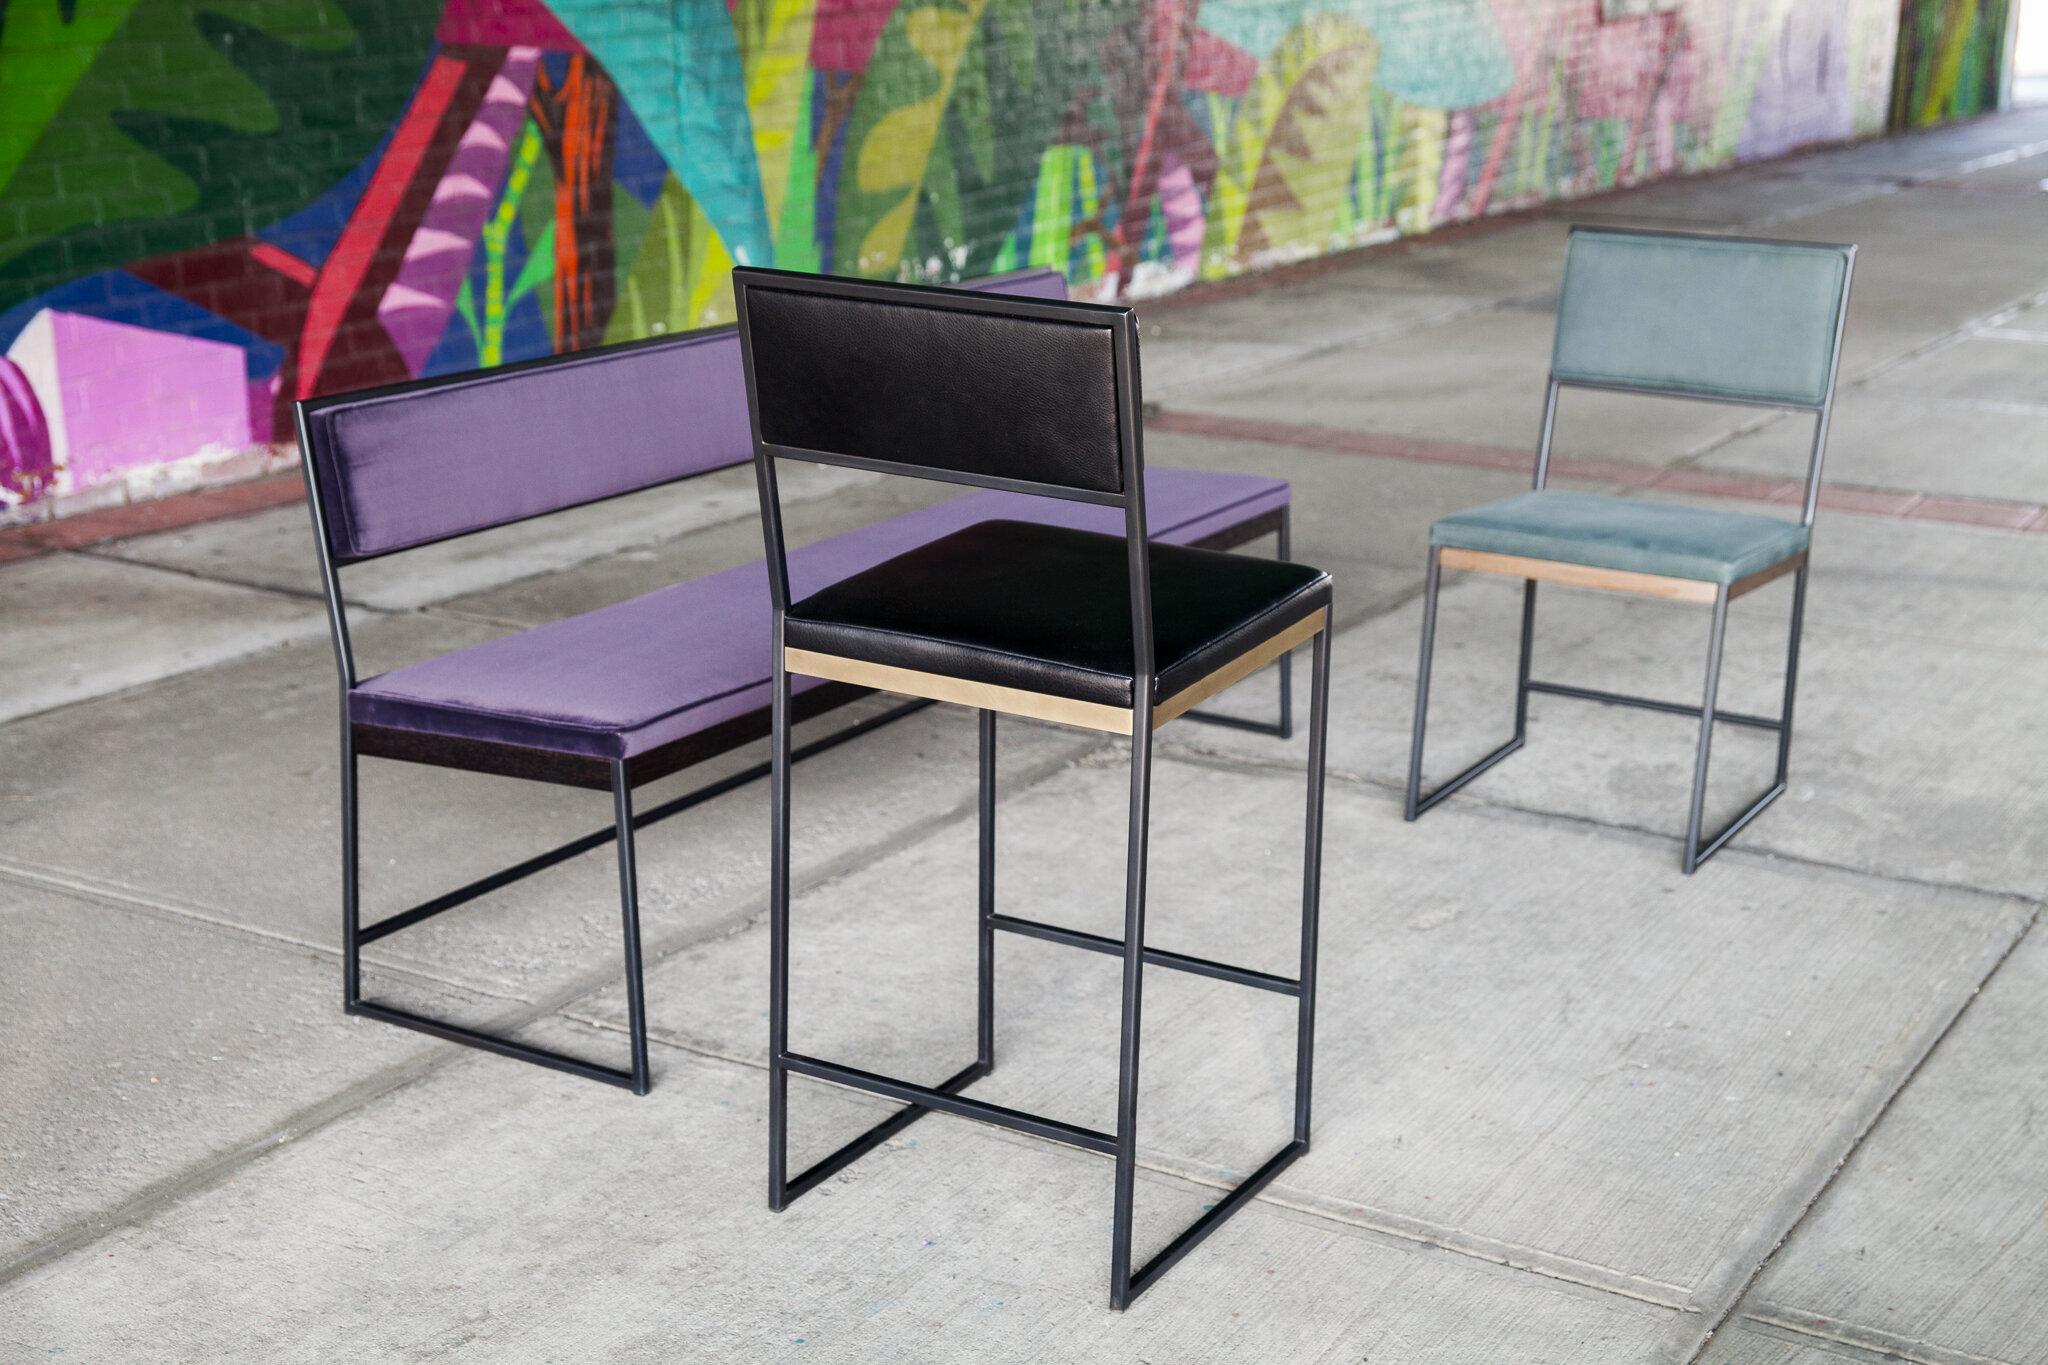 wud-furniture_hendrick-seating-collection-05-2018_7118-web.jpg